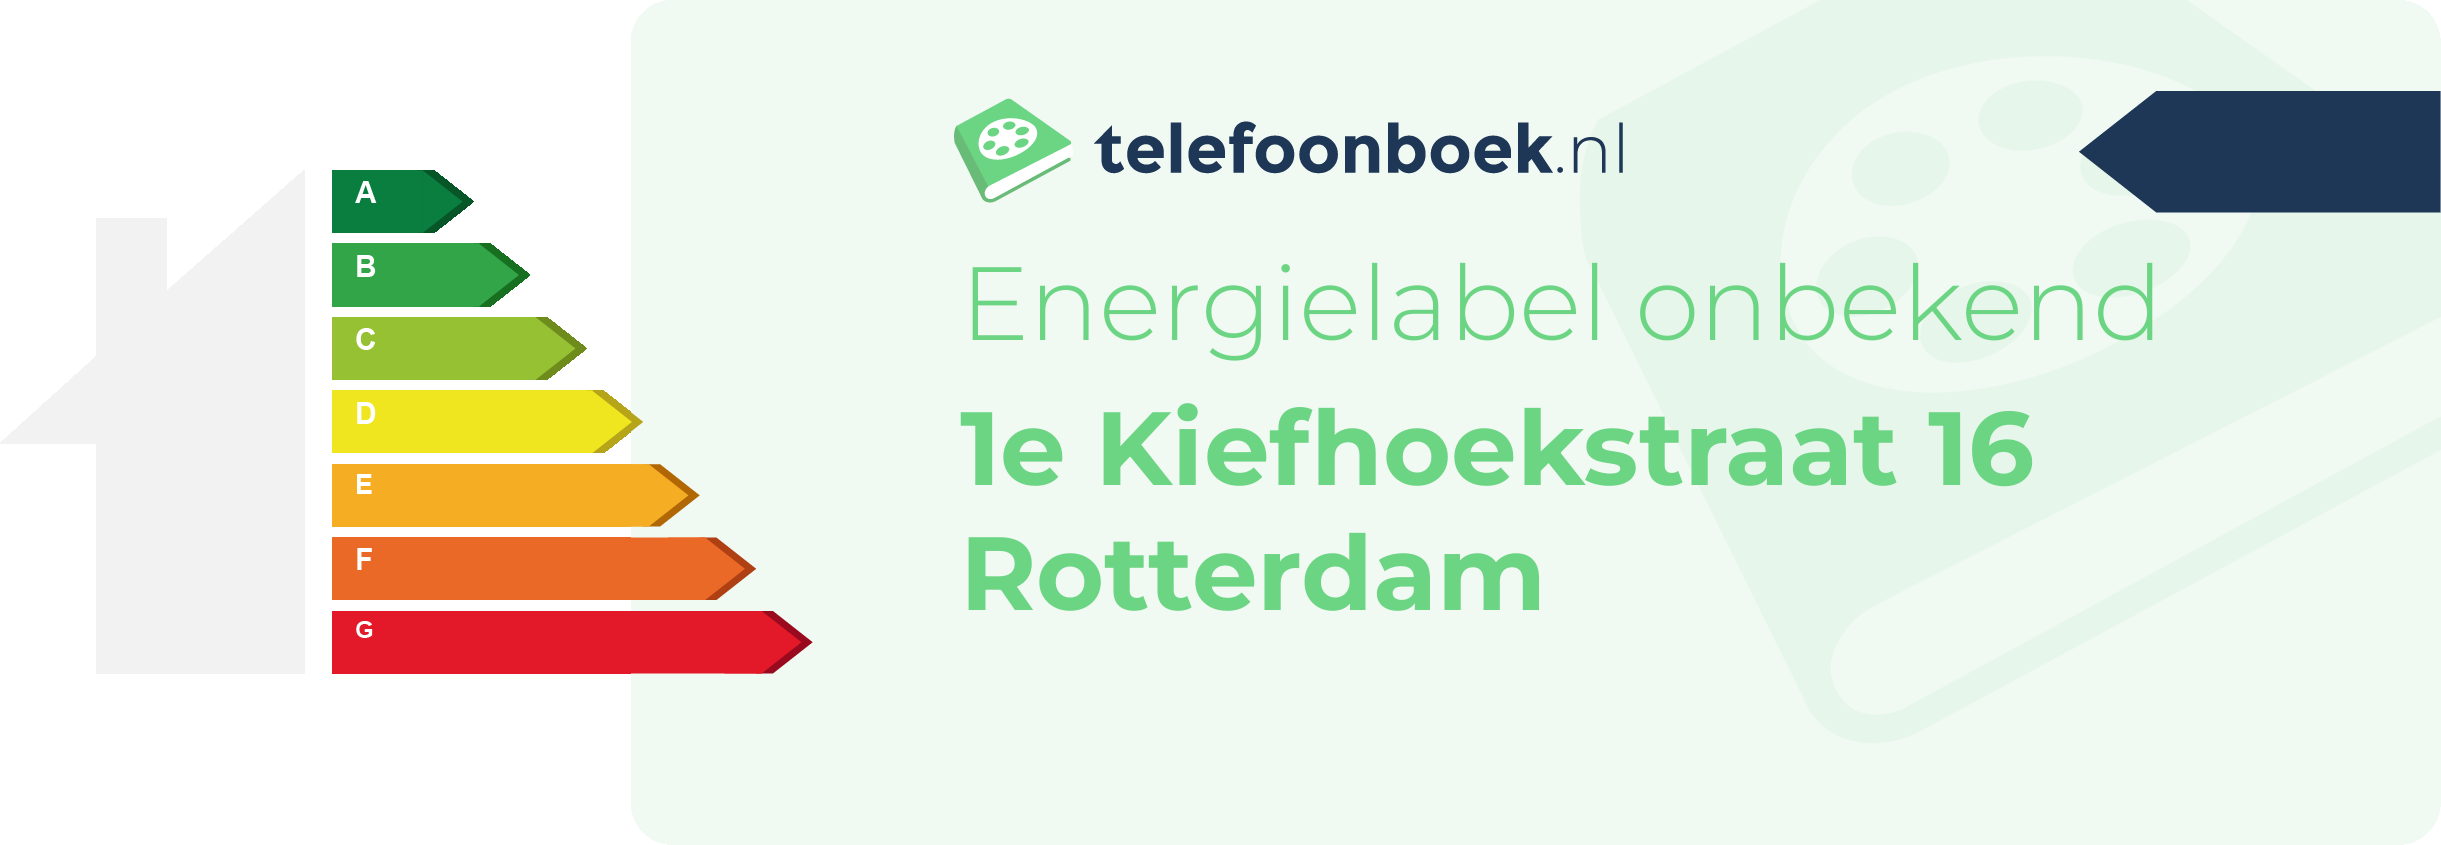 Energielabel 1e Kiefhoekstraat 16 Rotterdam